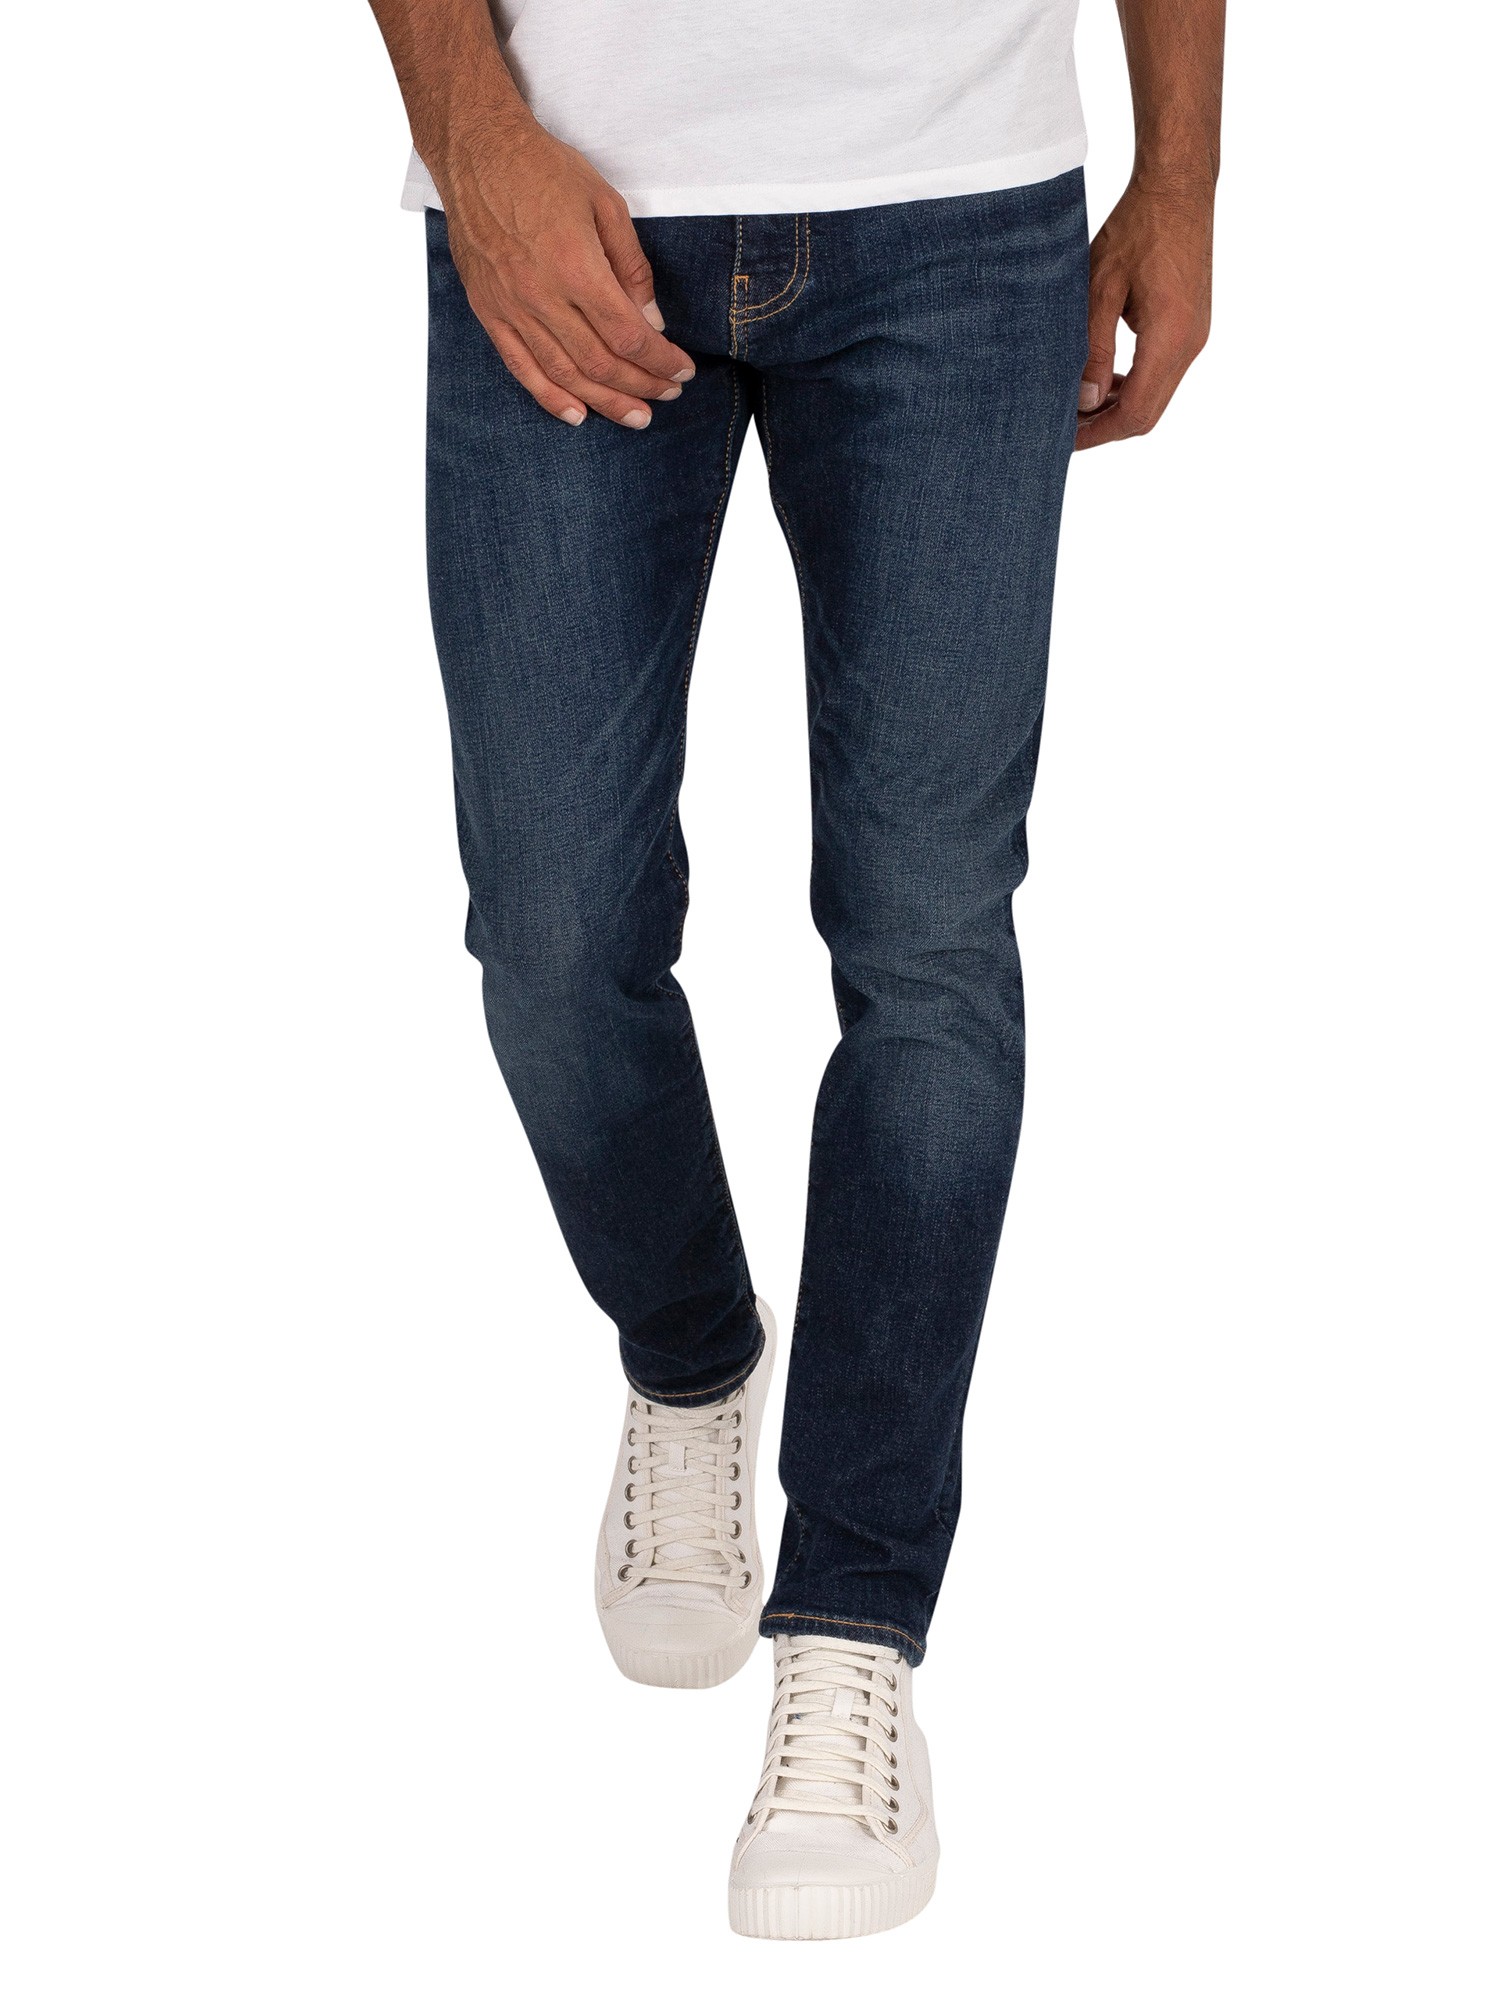 Levi's 512 Slim Taper Jeans - Brimstone 